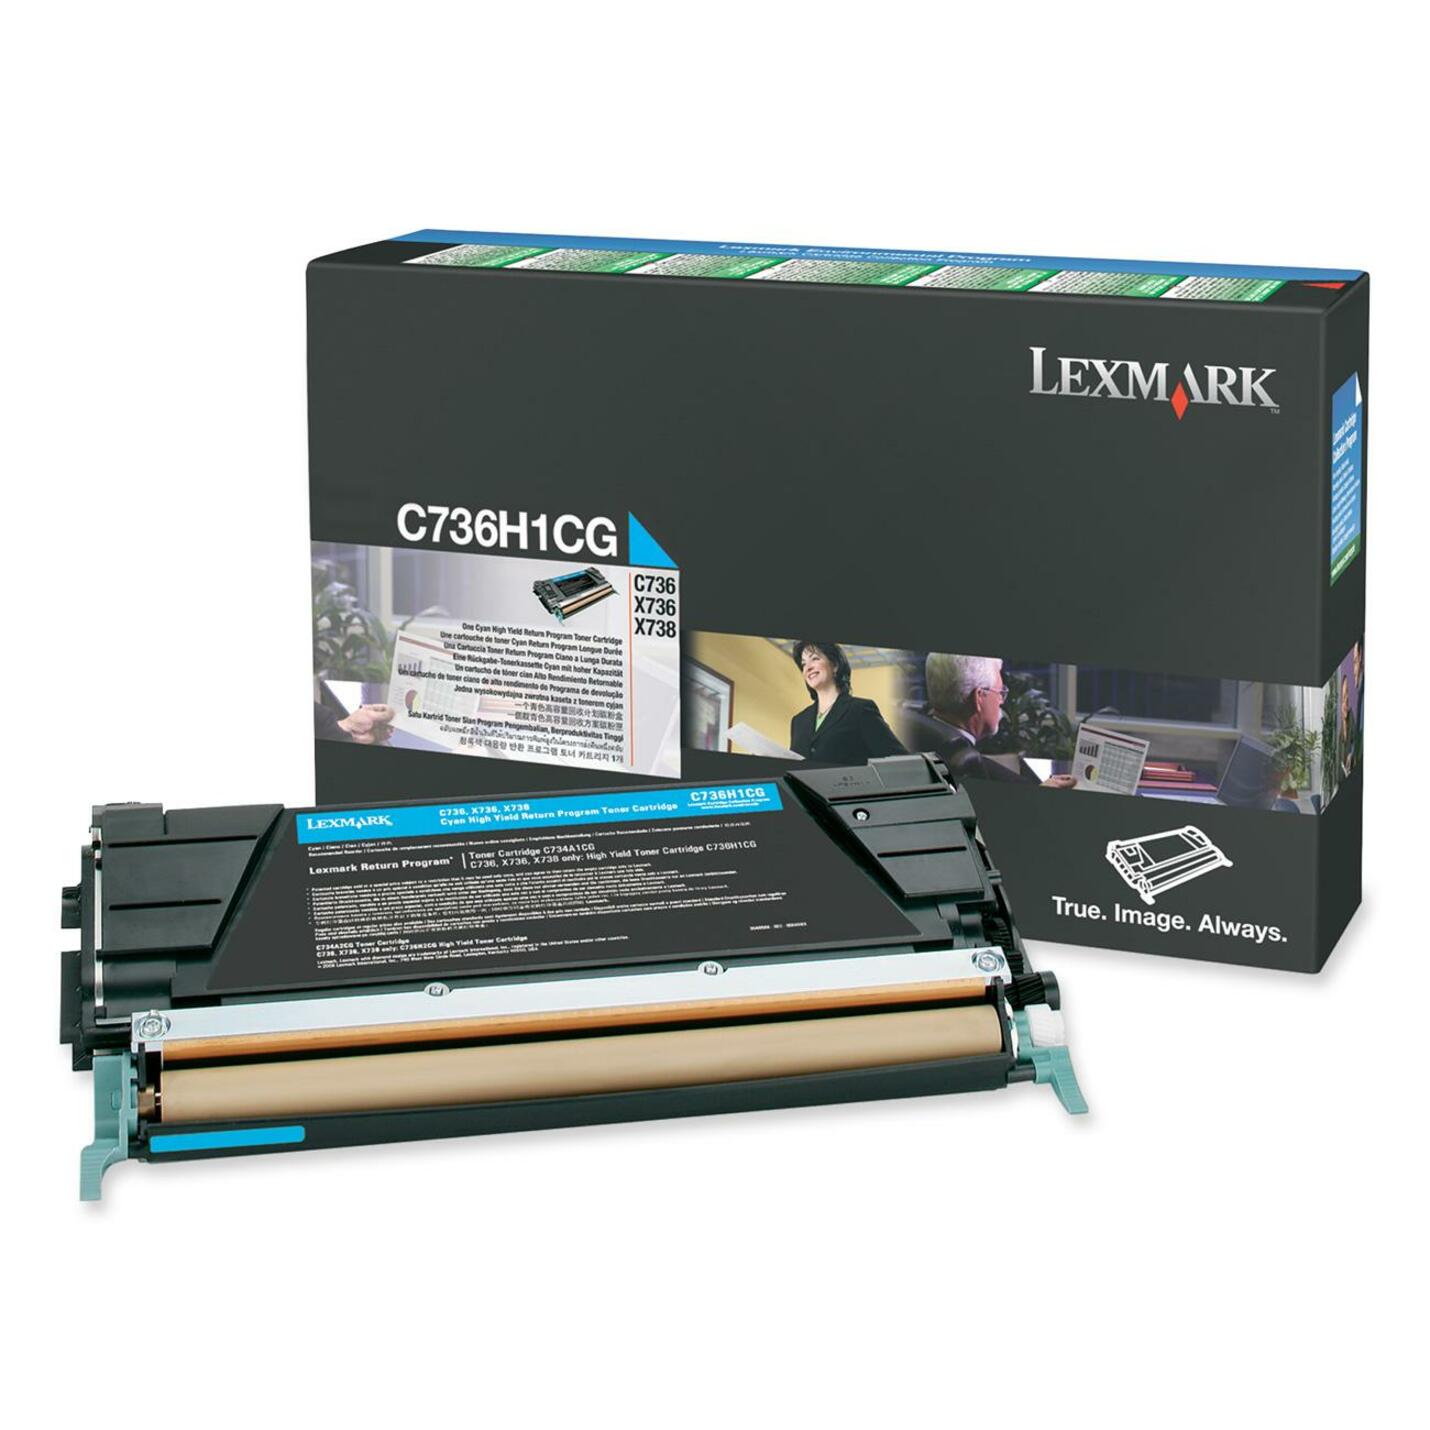 Lexmark C736H1CG Toner Cartridge, Cyan, 10000 Page Yield